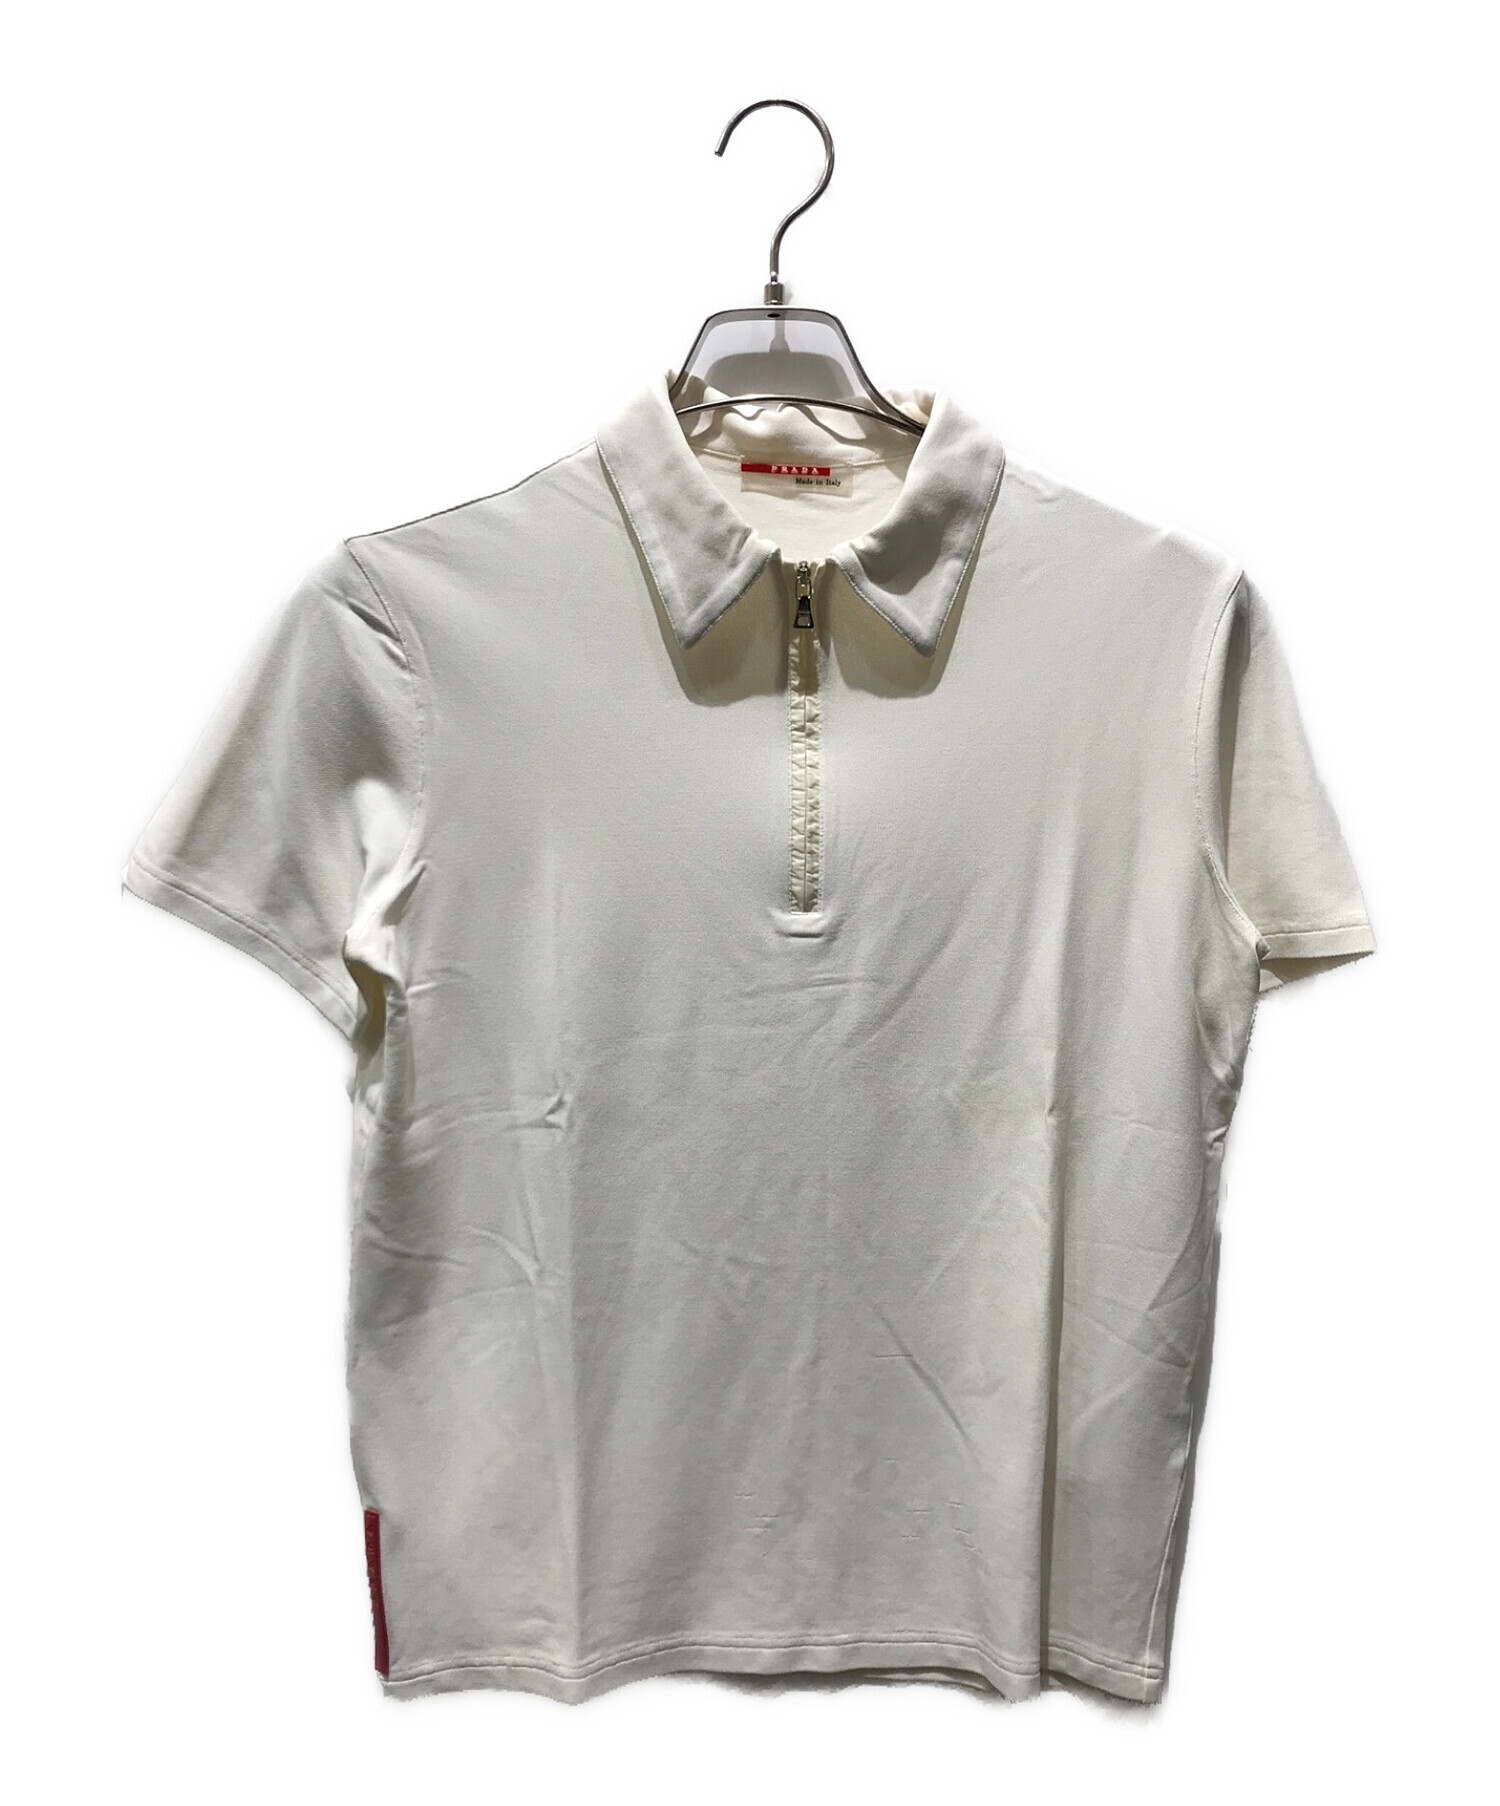 PRADA SPORTS (プラダスポーツ) ジップポロシャツ ホワイト サイズ:S